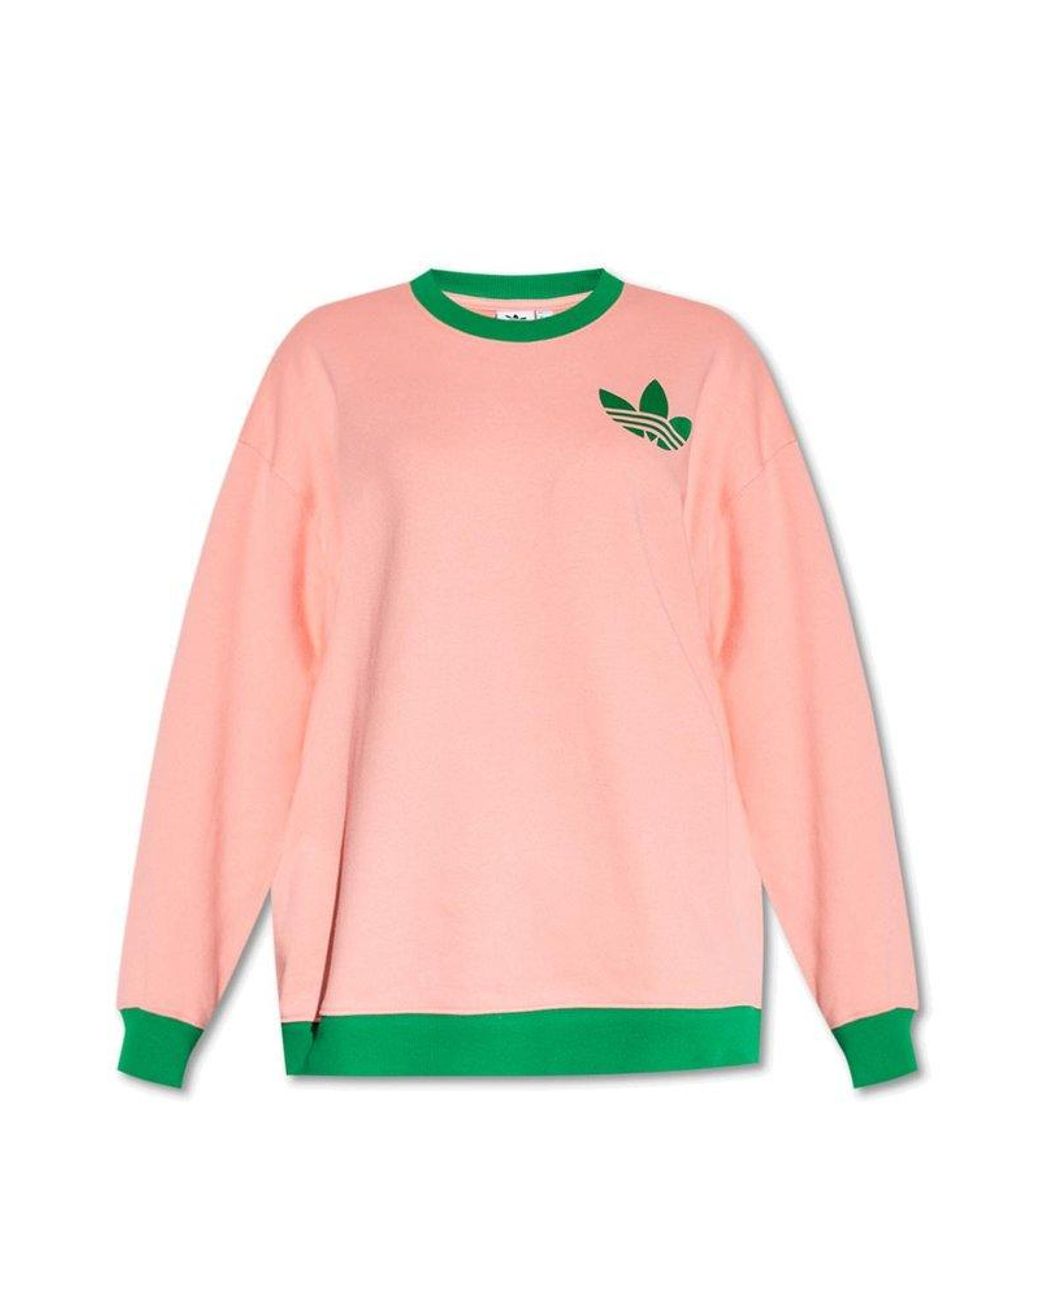 adidas Originals Oversize Sweatshirt in Pink | Lyst